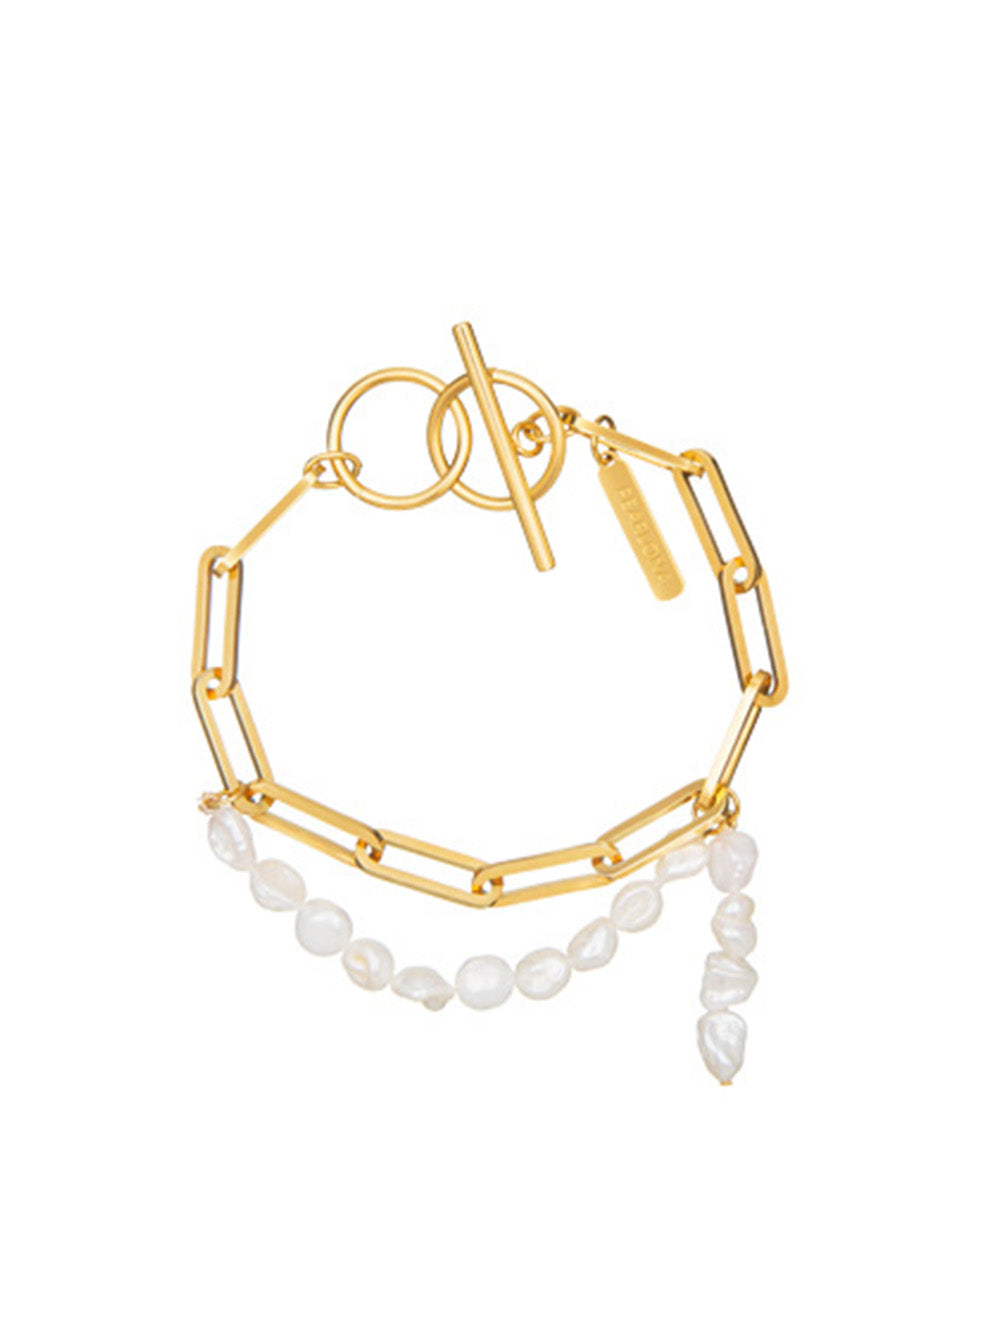 MUKTANK Baroque Pearl Gold Chain Link Bracelet